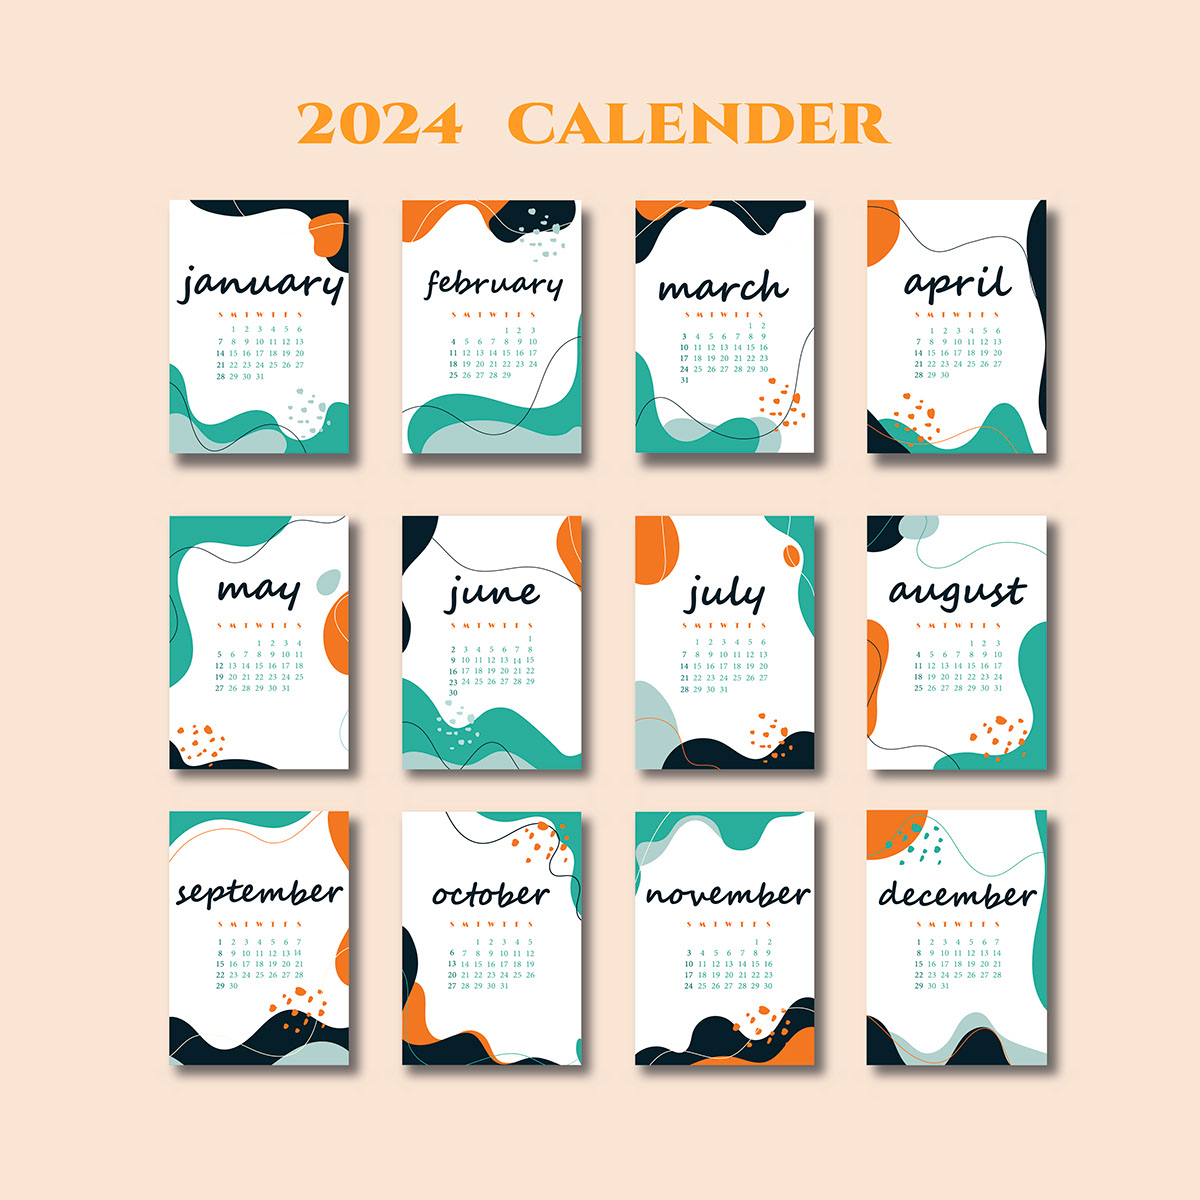 2024 calendar rendition image